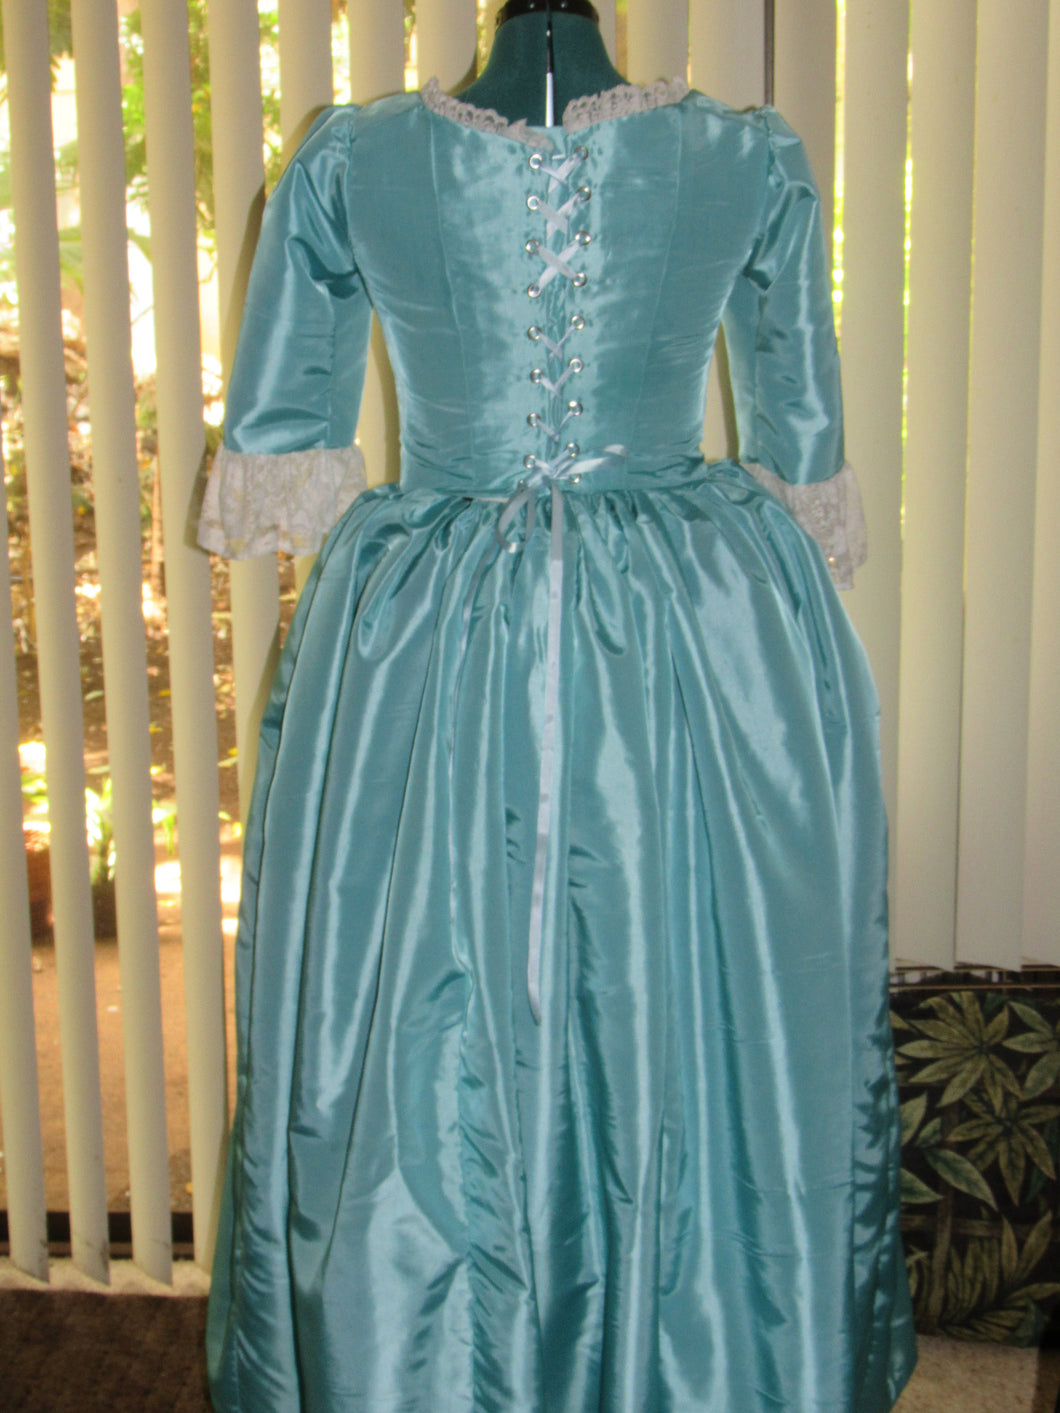 Eliza Schuyler Dress Hamilton Costume Hamilton Cosplay Dress Historical Colonial Dress for Teens/Adults